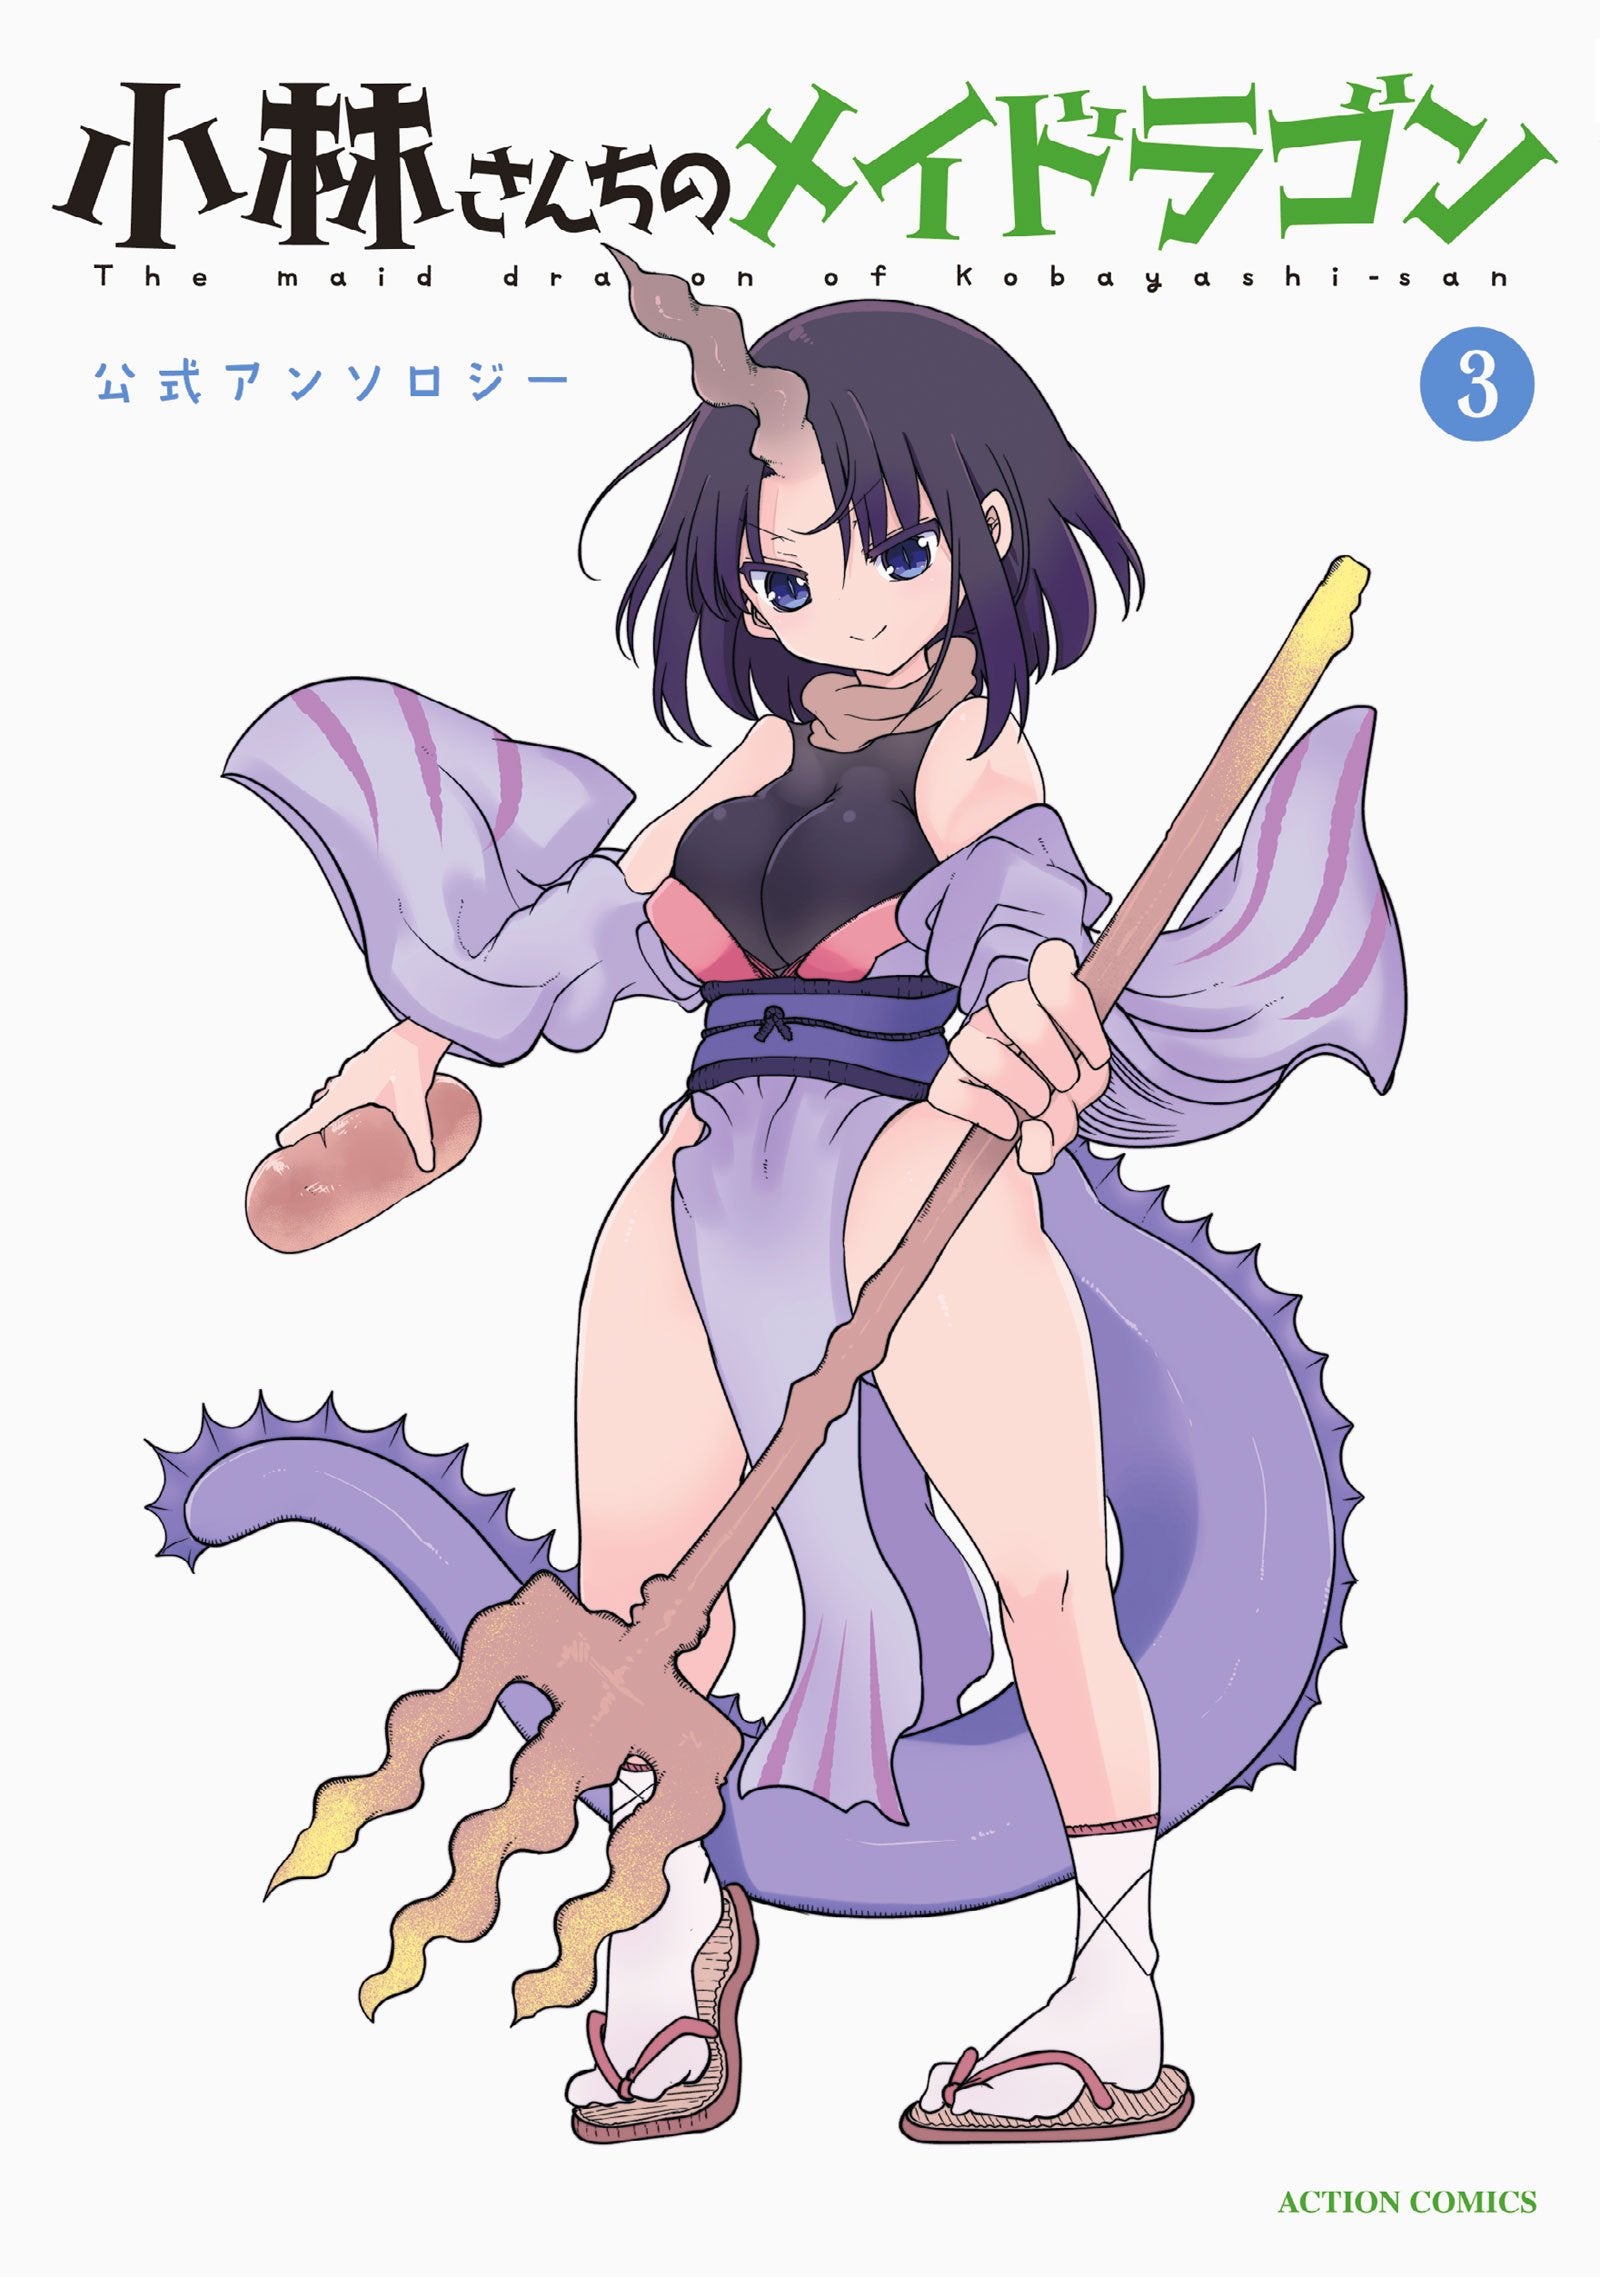 Miss Kobayashi's Dragon Maid - Wikipedia